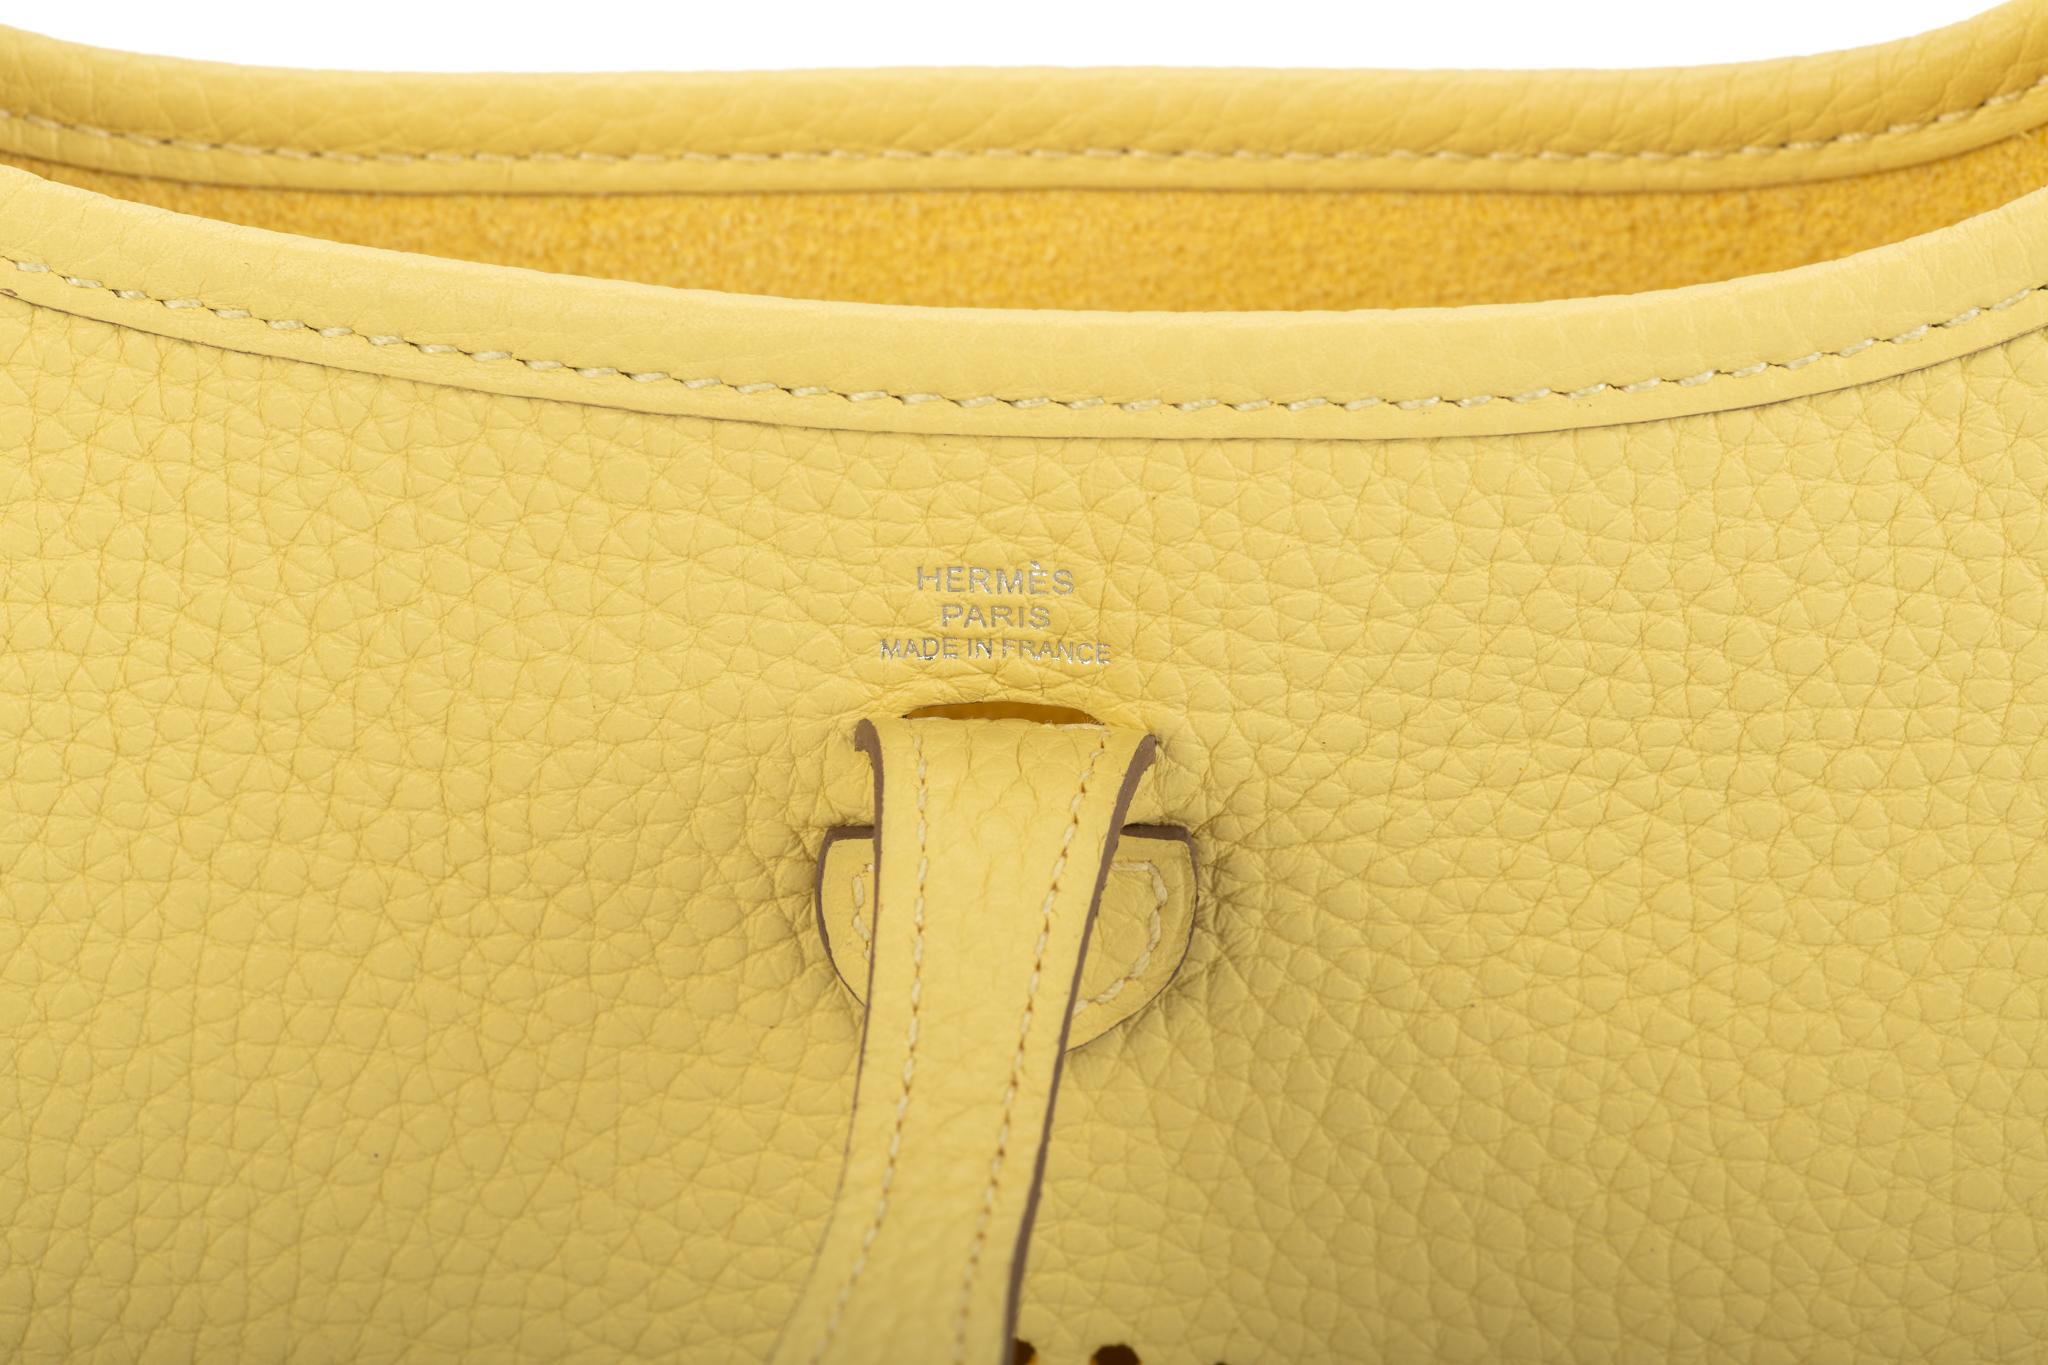 Hermès mini sac à bandoulière Evelyne Poussin jaune jaune, neuf dans sa boîte en vente 2